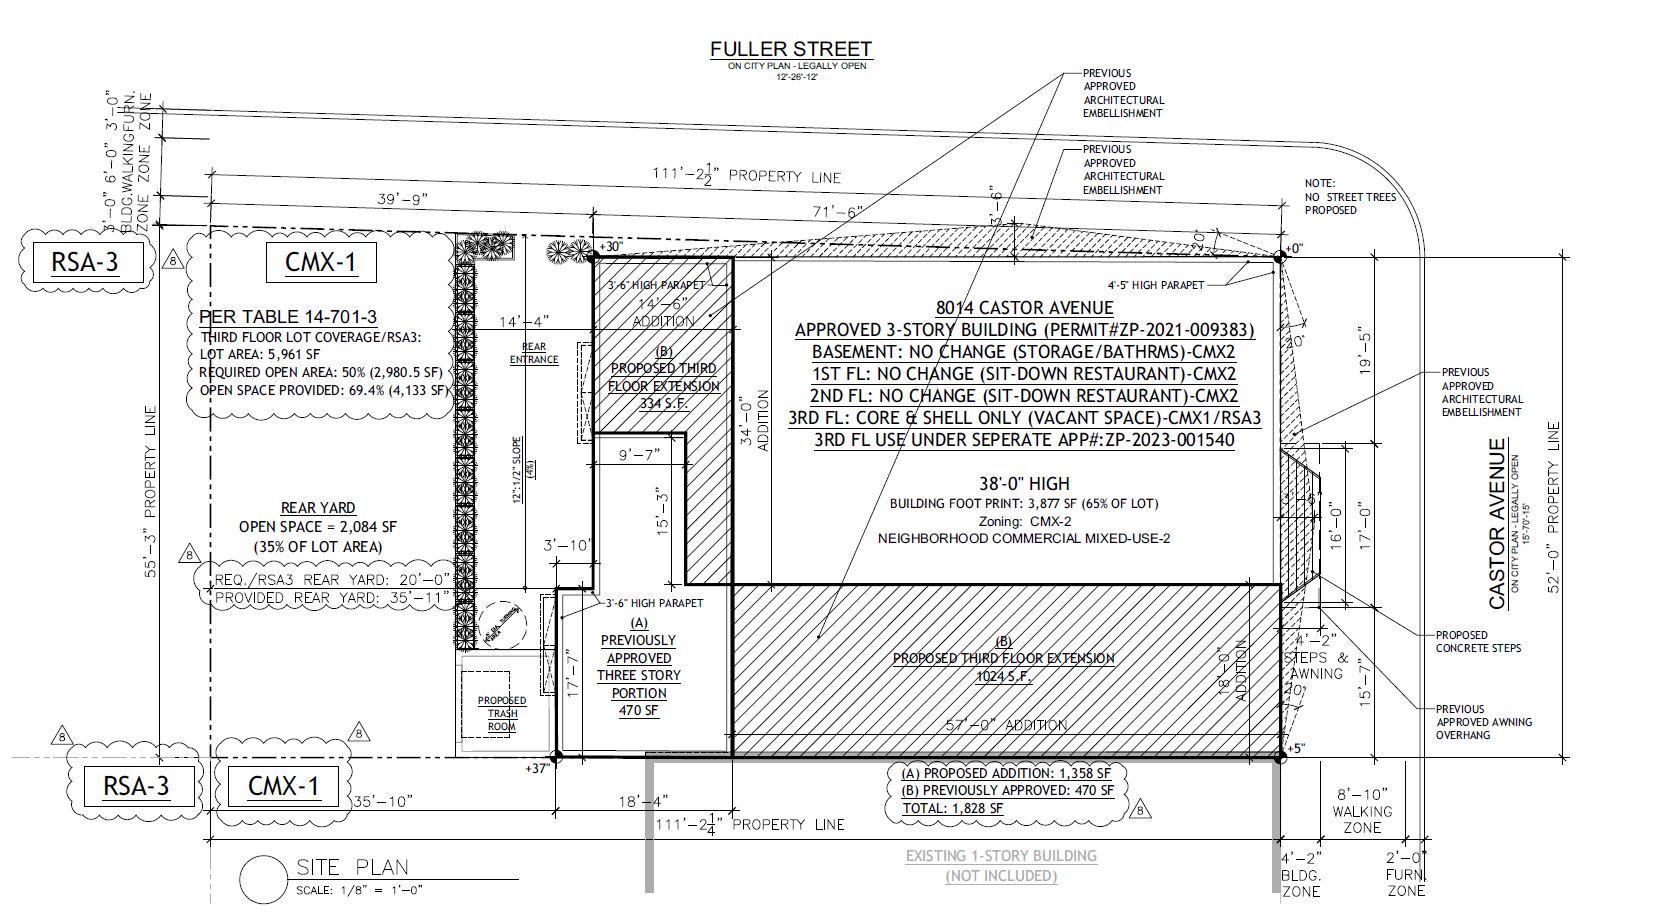 8014 Castor Avenue. Site plan. Credit: Supreme Architects via the City of Philadelphia